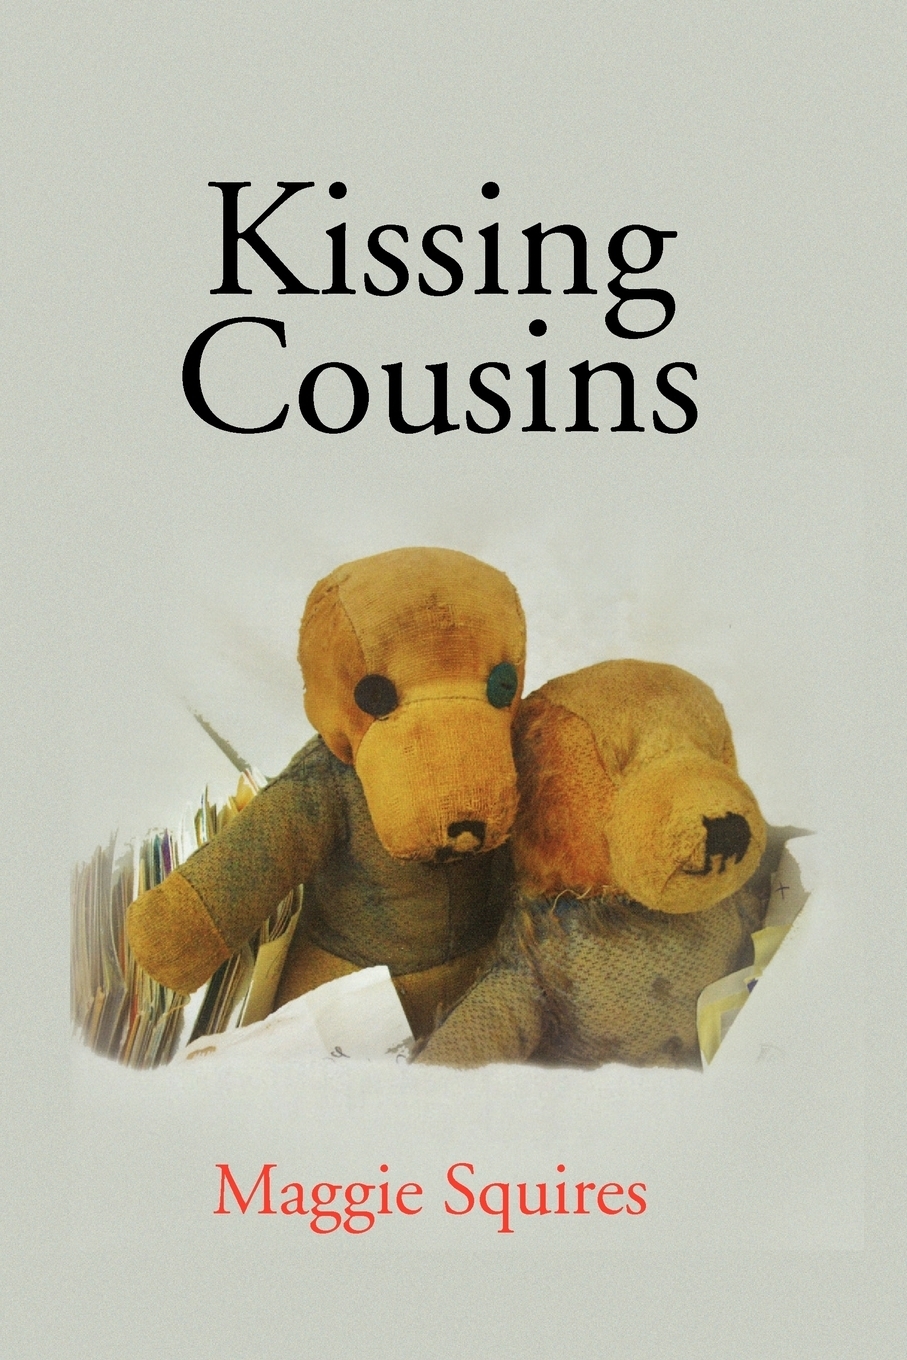 Onlyfans kissingcousins